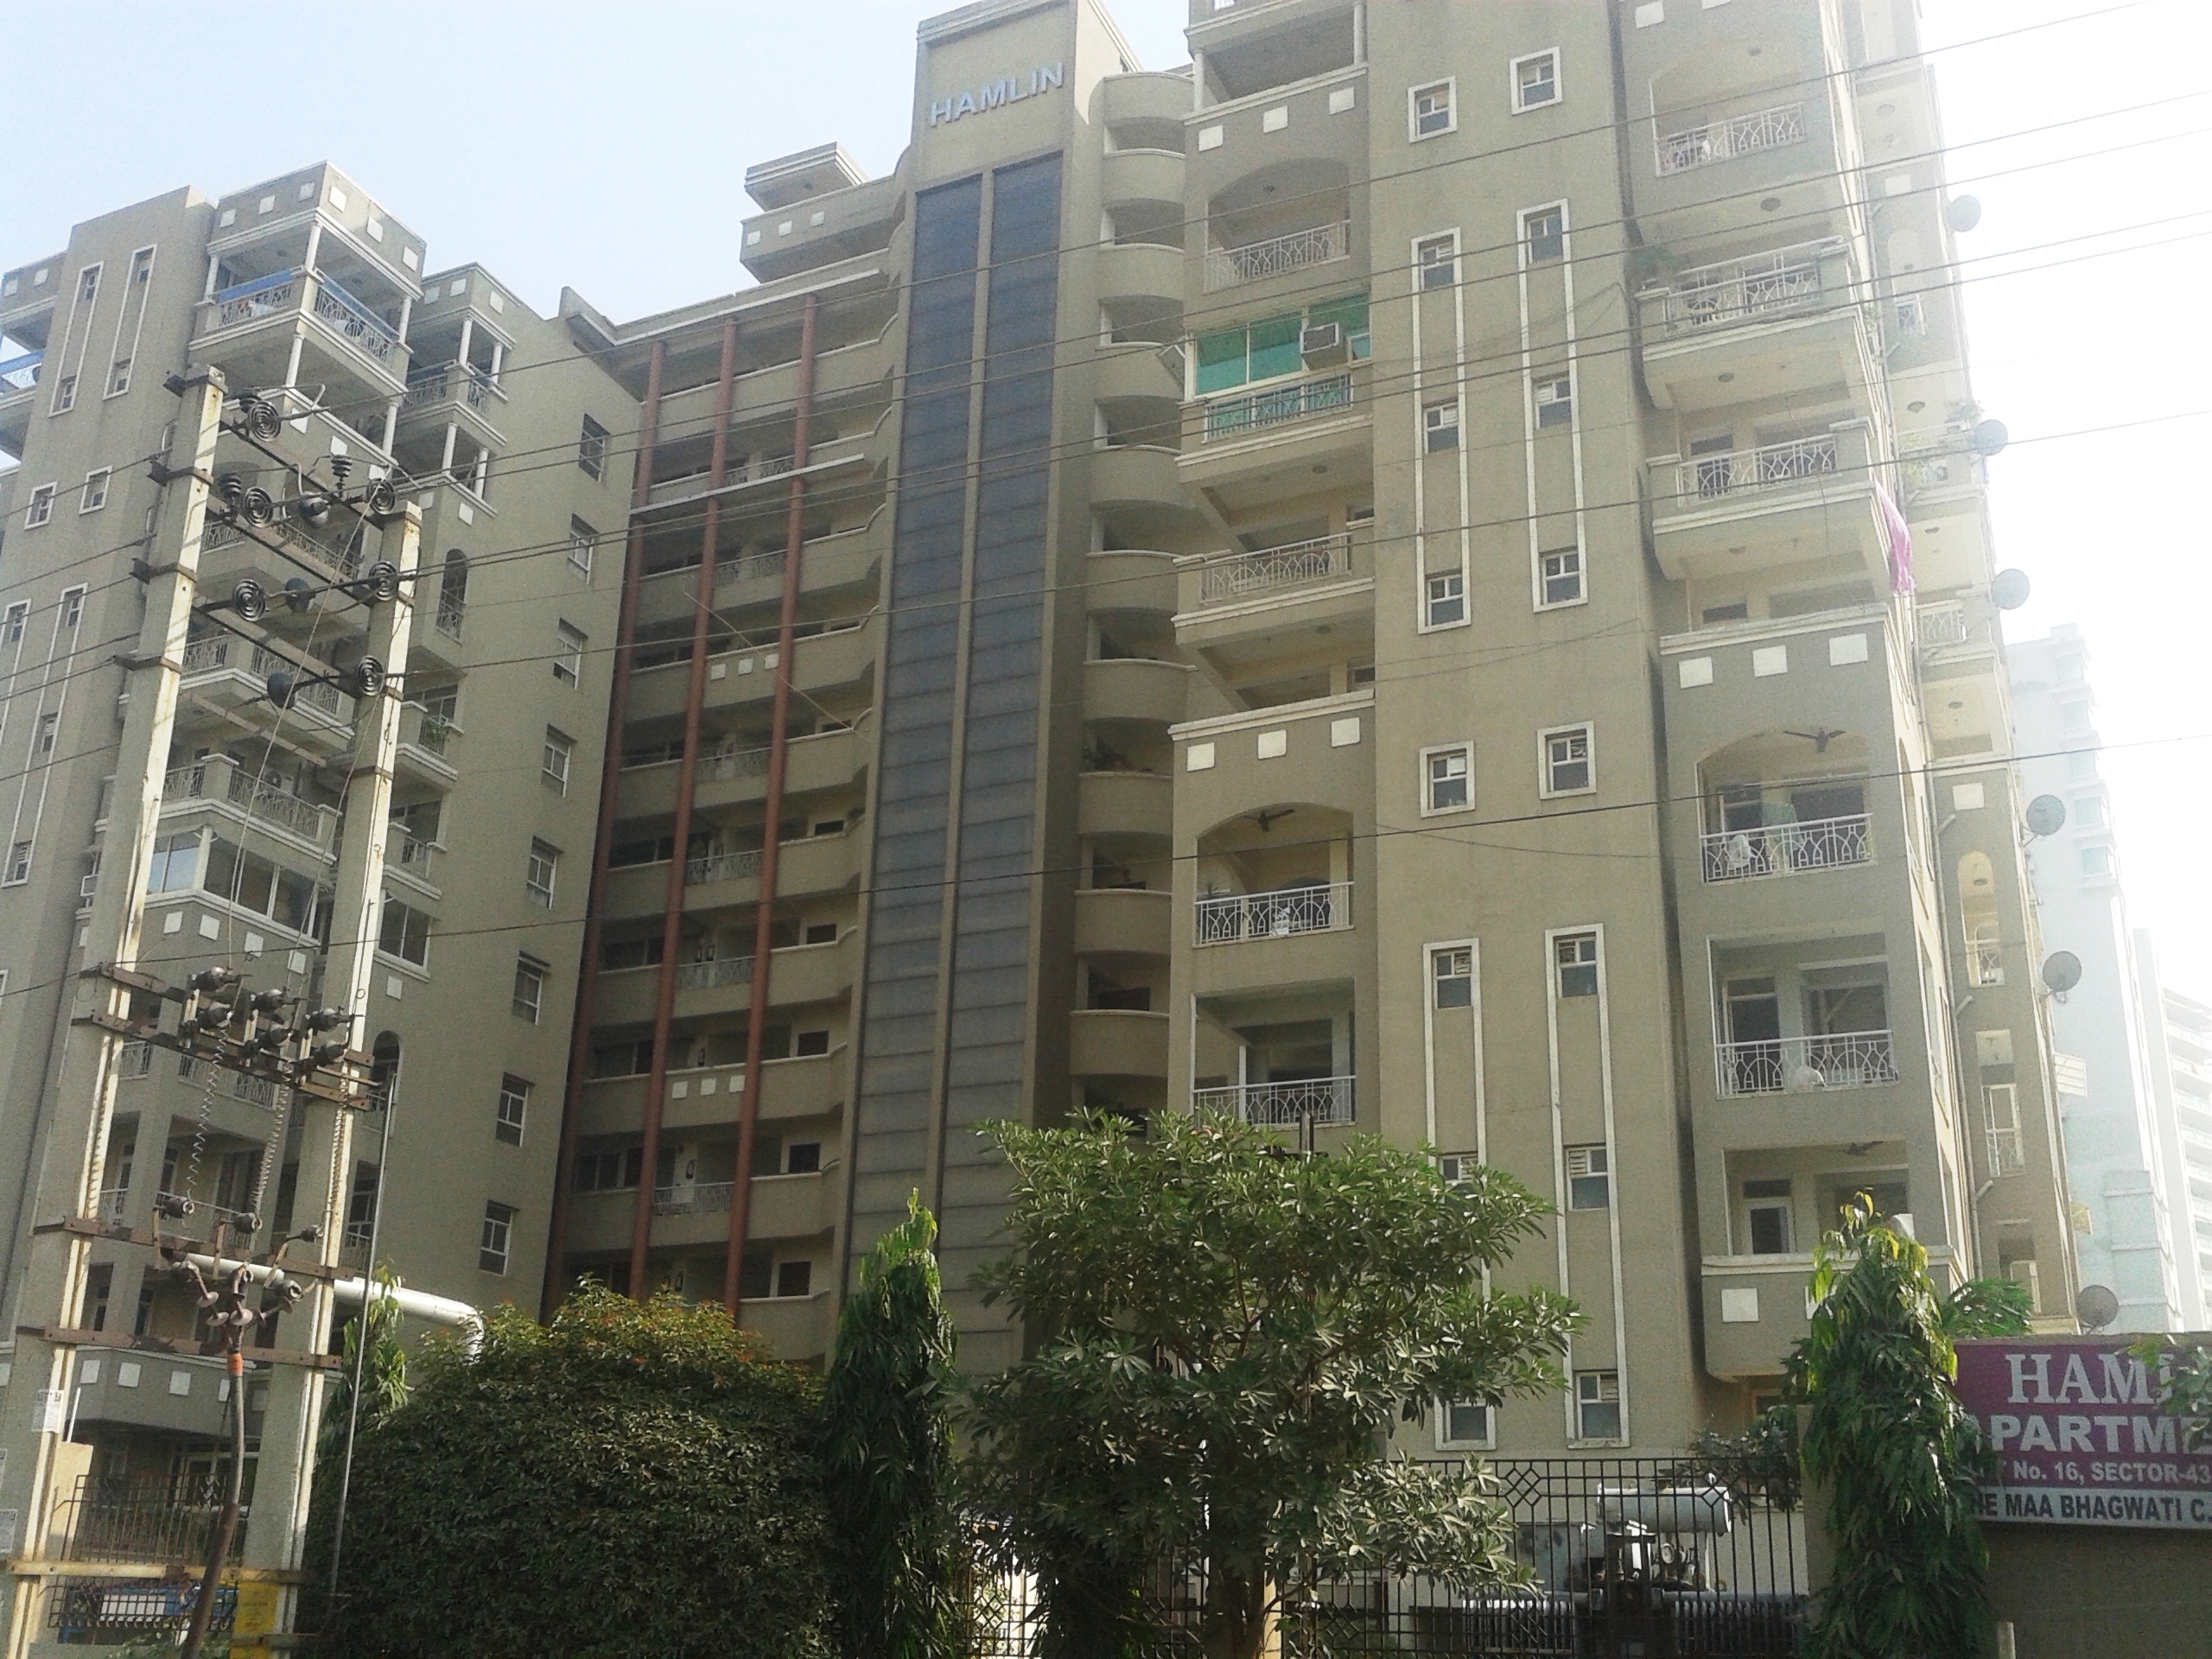 Hamlin Apartments (Maa Bhagwati CGHS) Project Deails